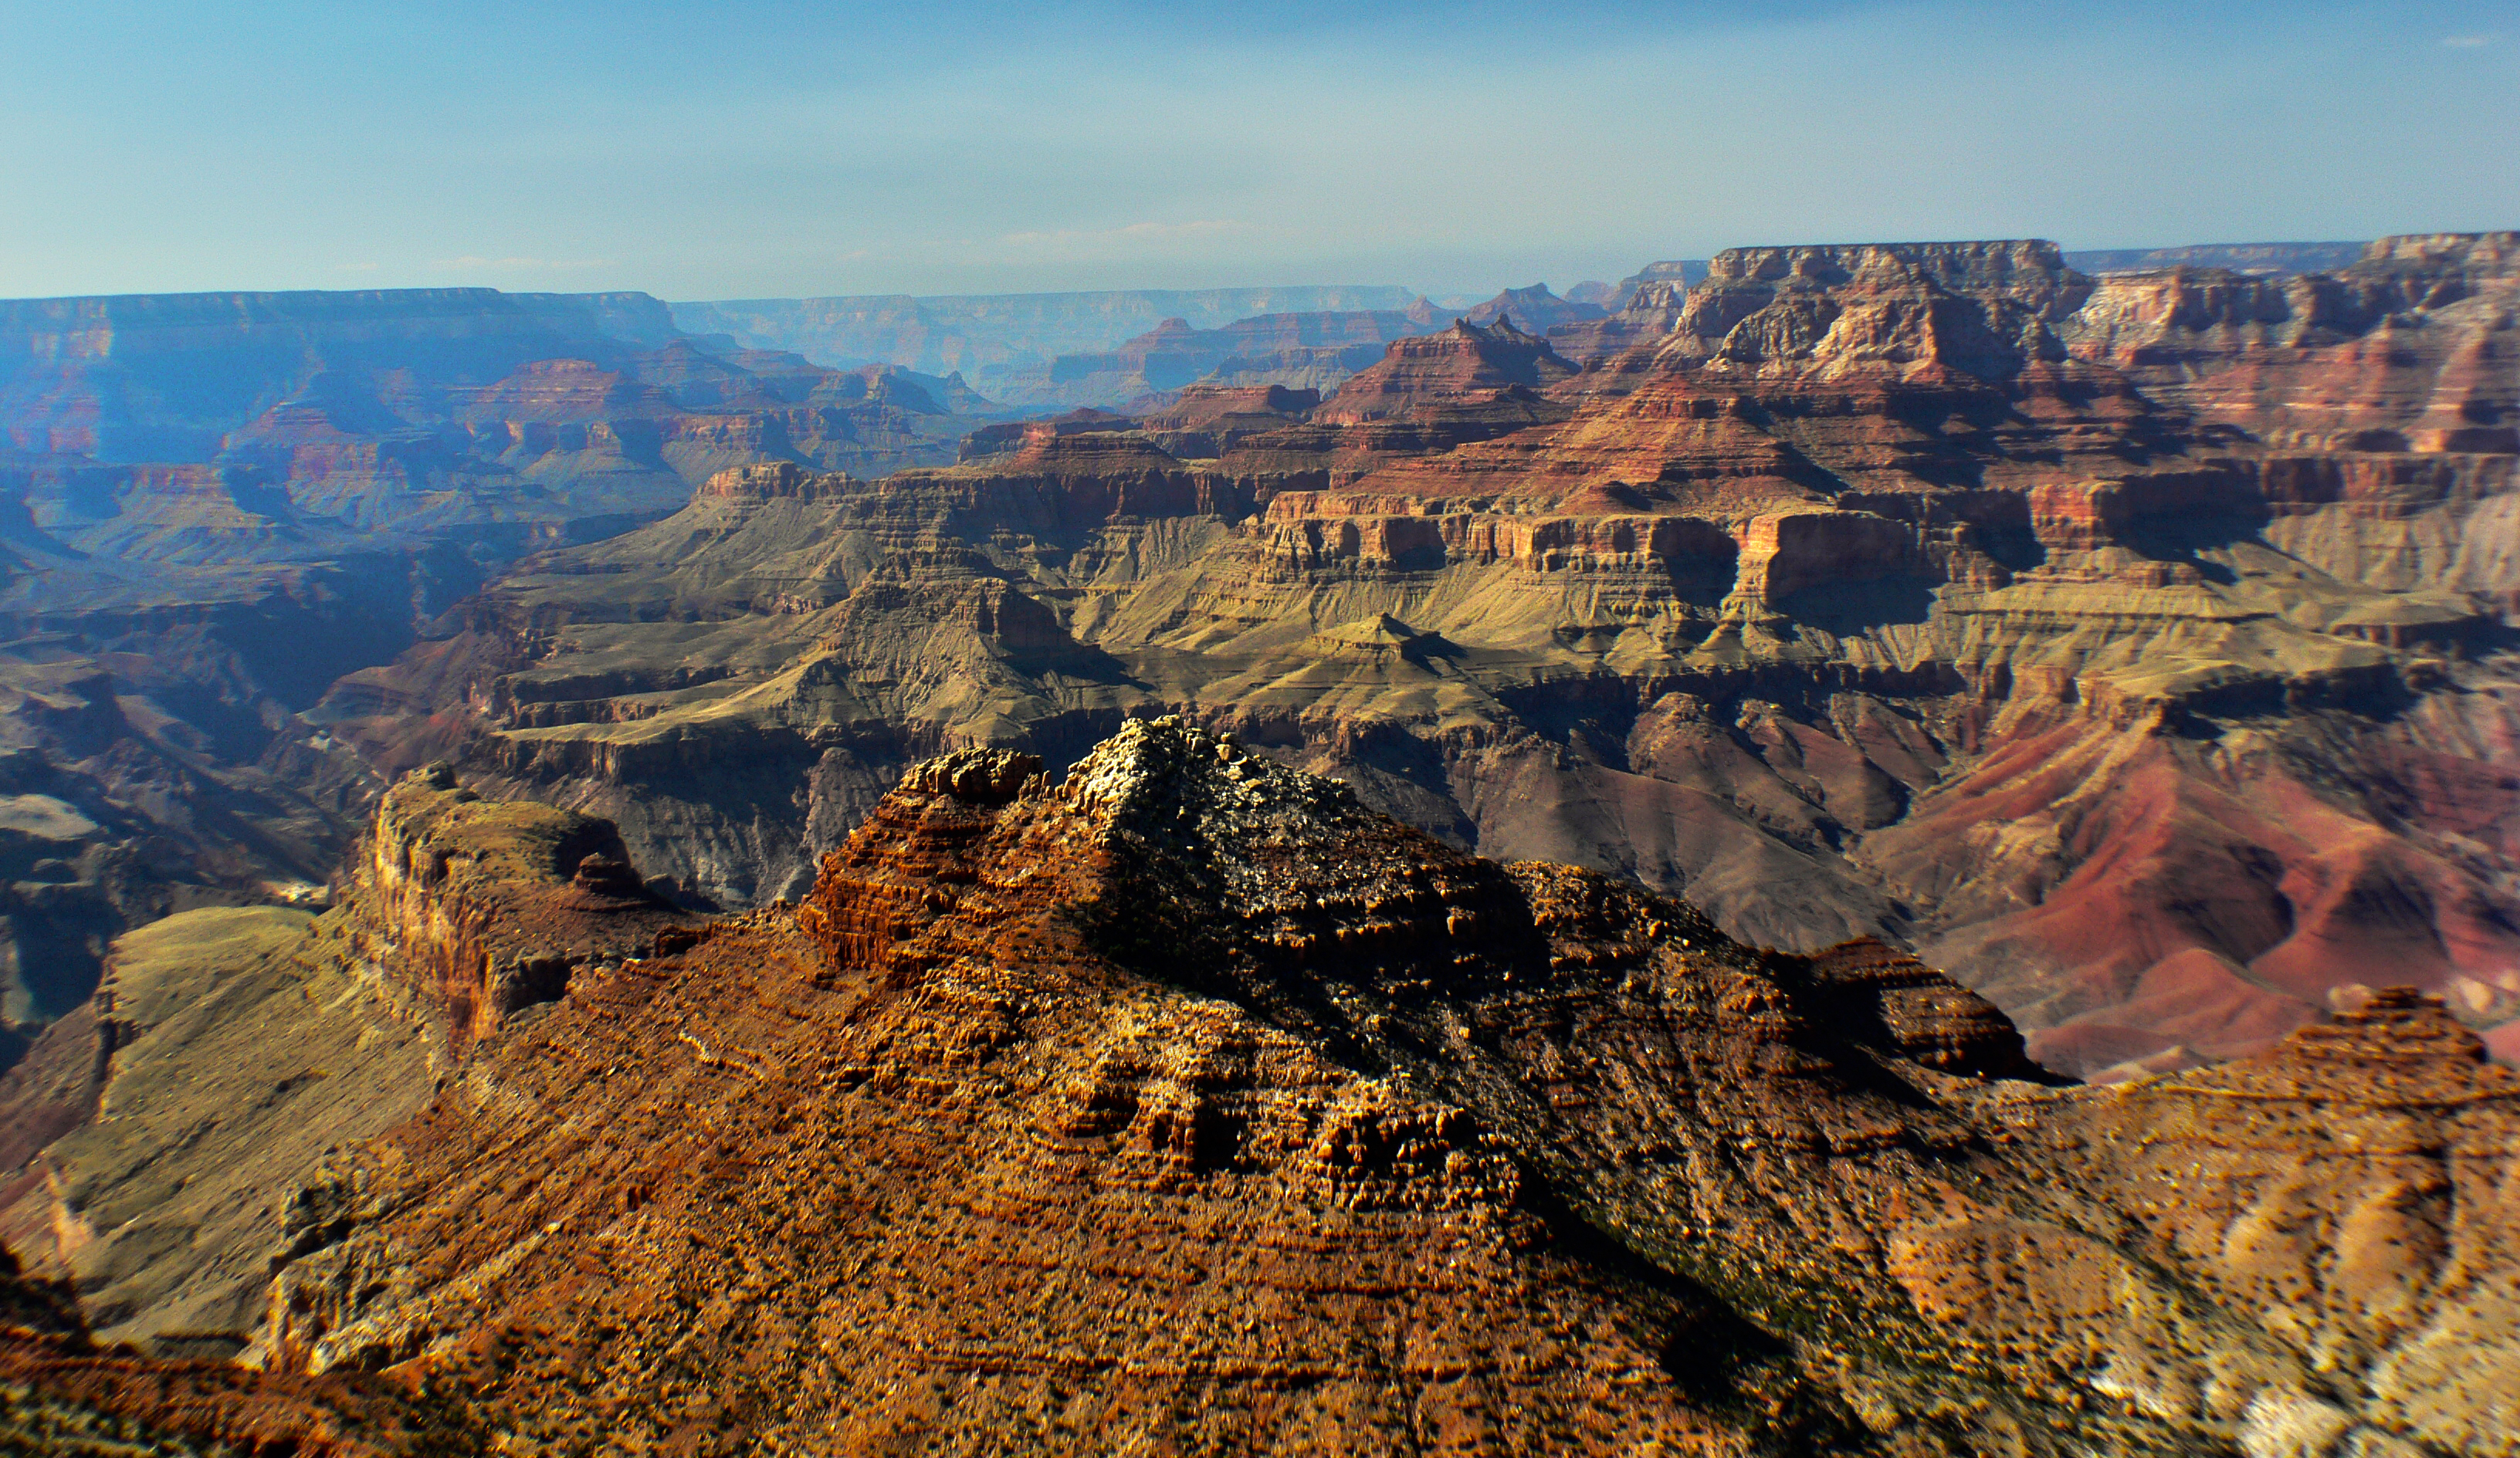 The grand canyon photo